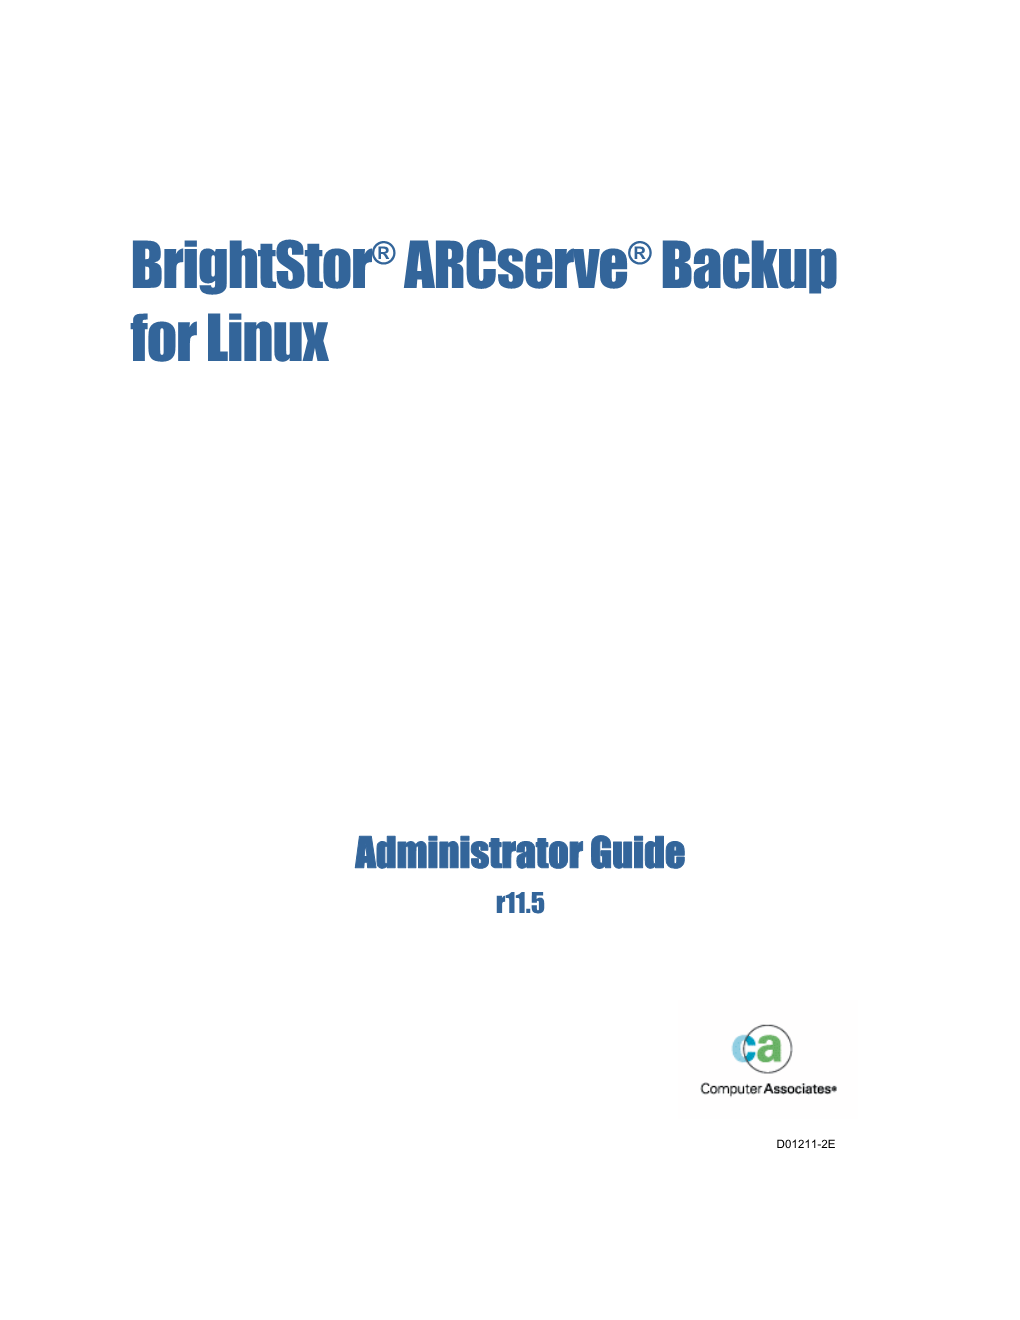 Brightstor Arcserve Backup for Linux Administrator Guide